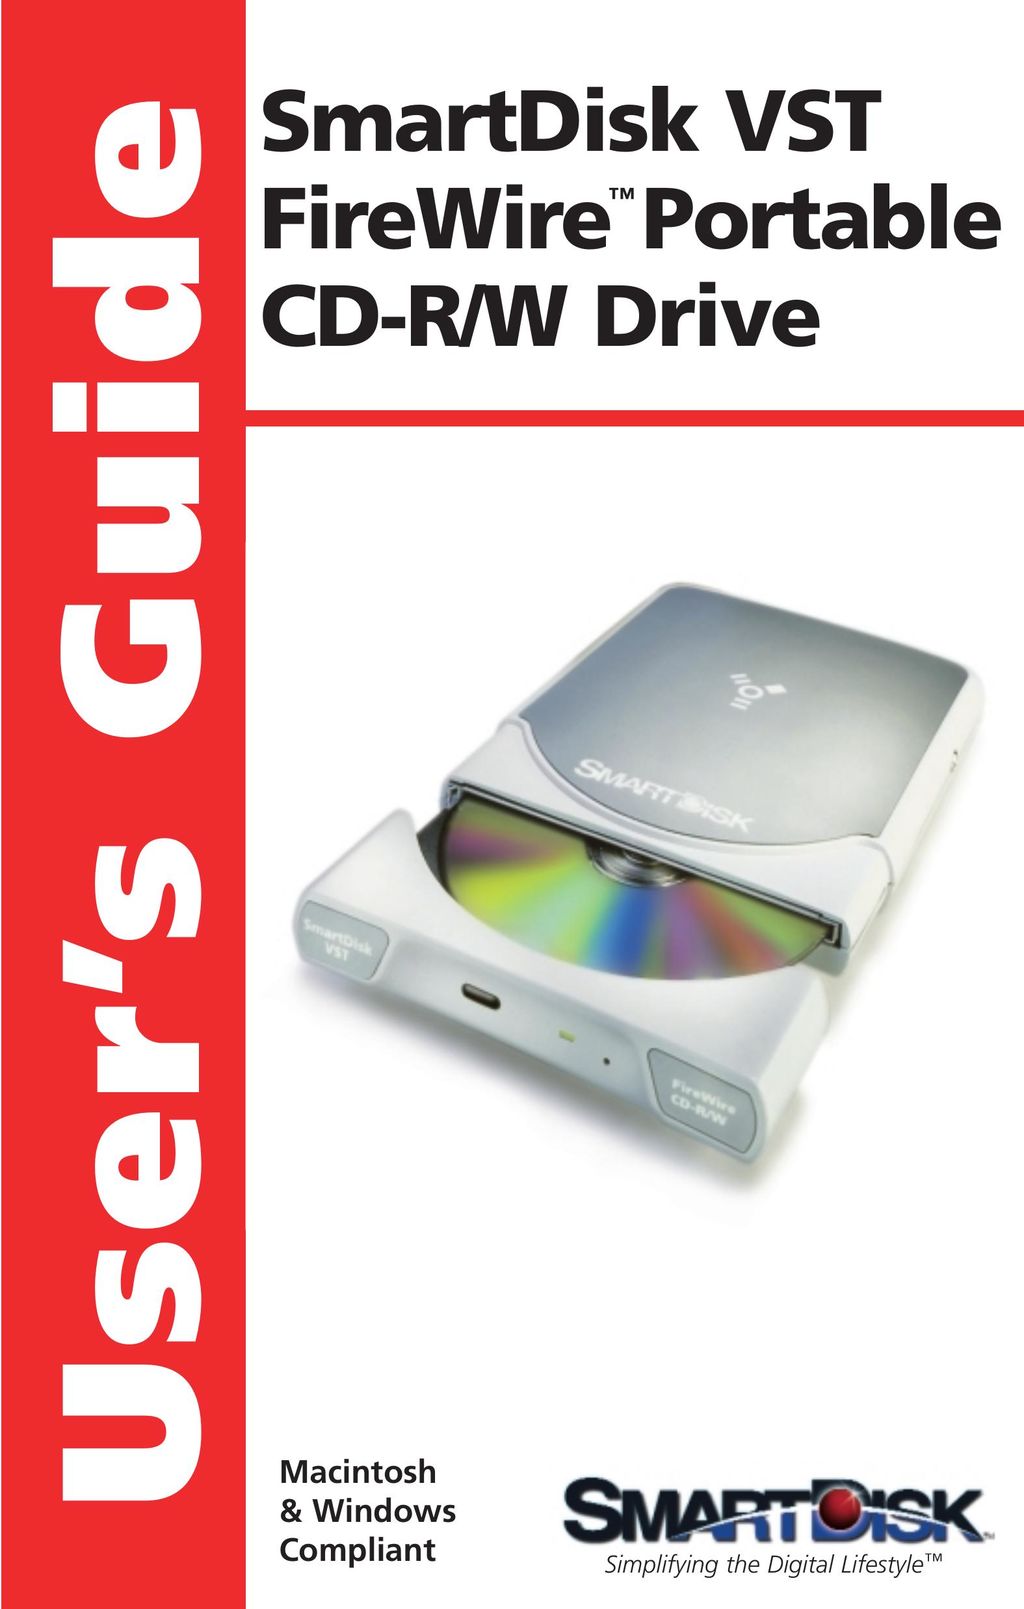 SmartDisk VST FireWireTM Portable CD-R/W Drive CD Player User Manual